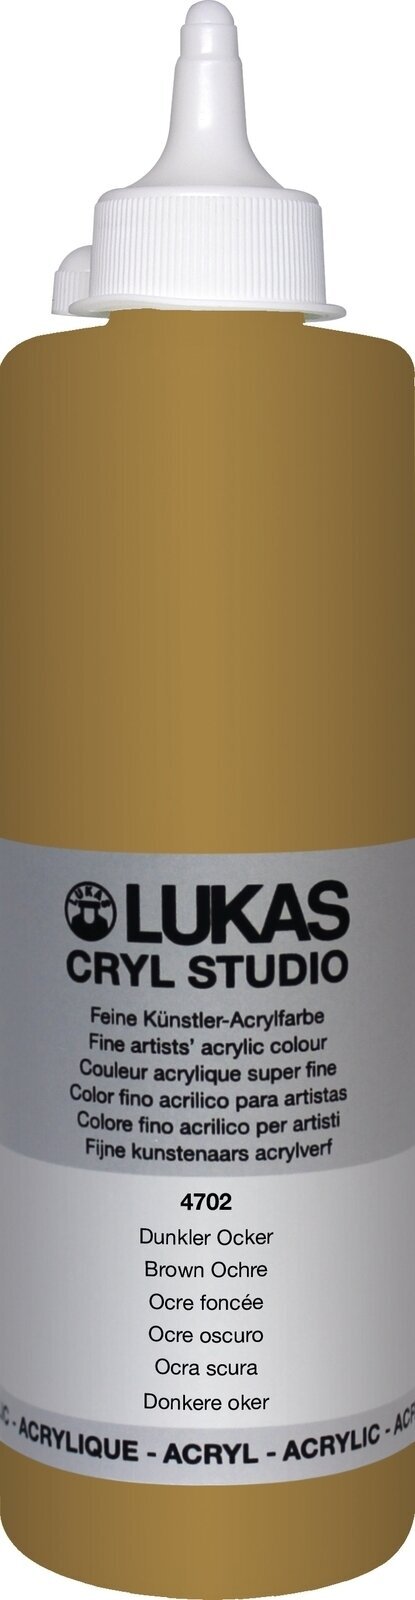 Acrylfarbe Lukas Cryl Studio Acrylfarbe 500 ml Brown Ochre